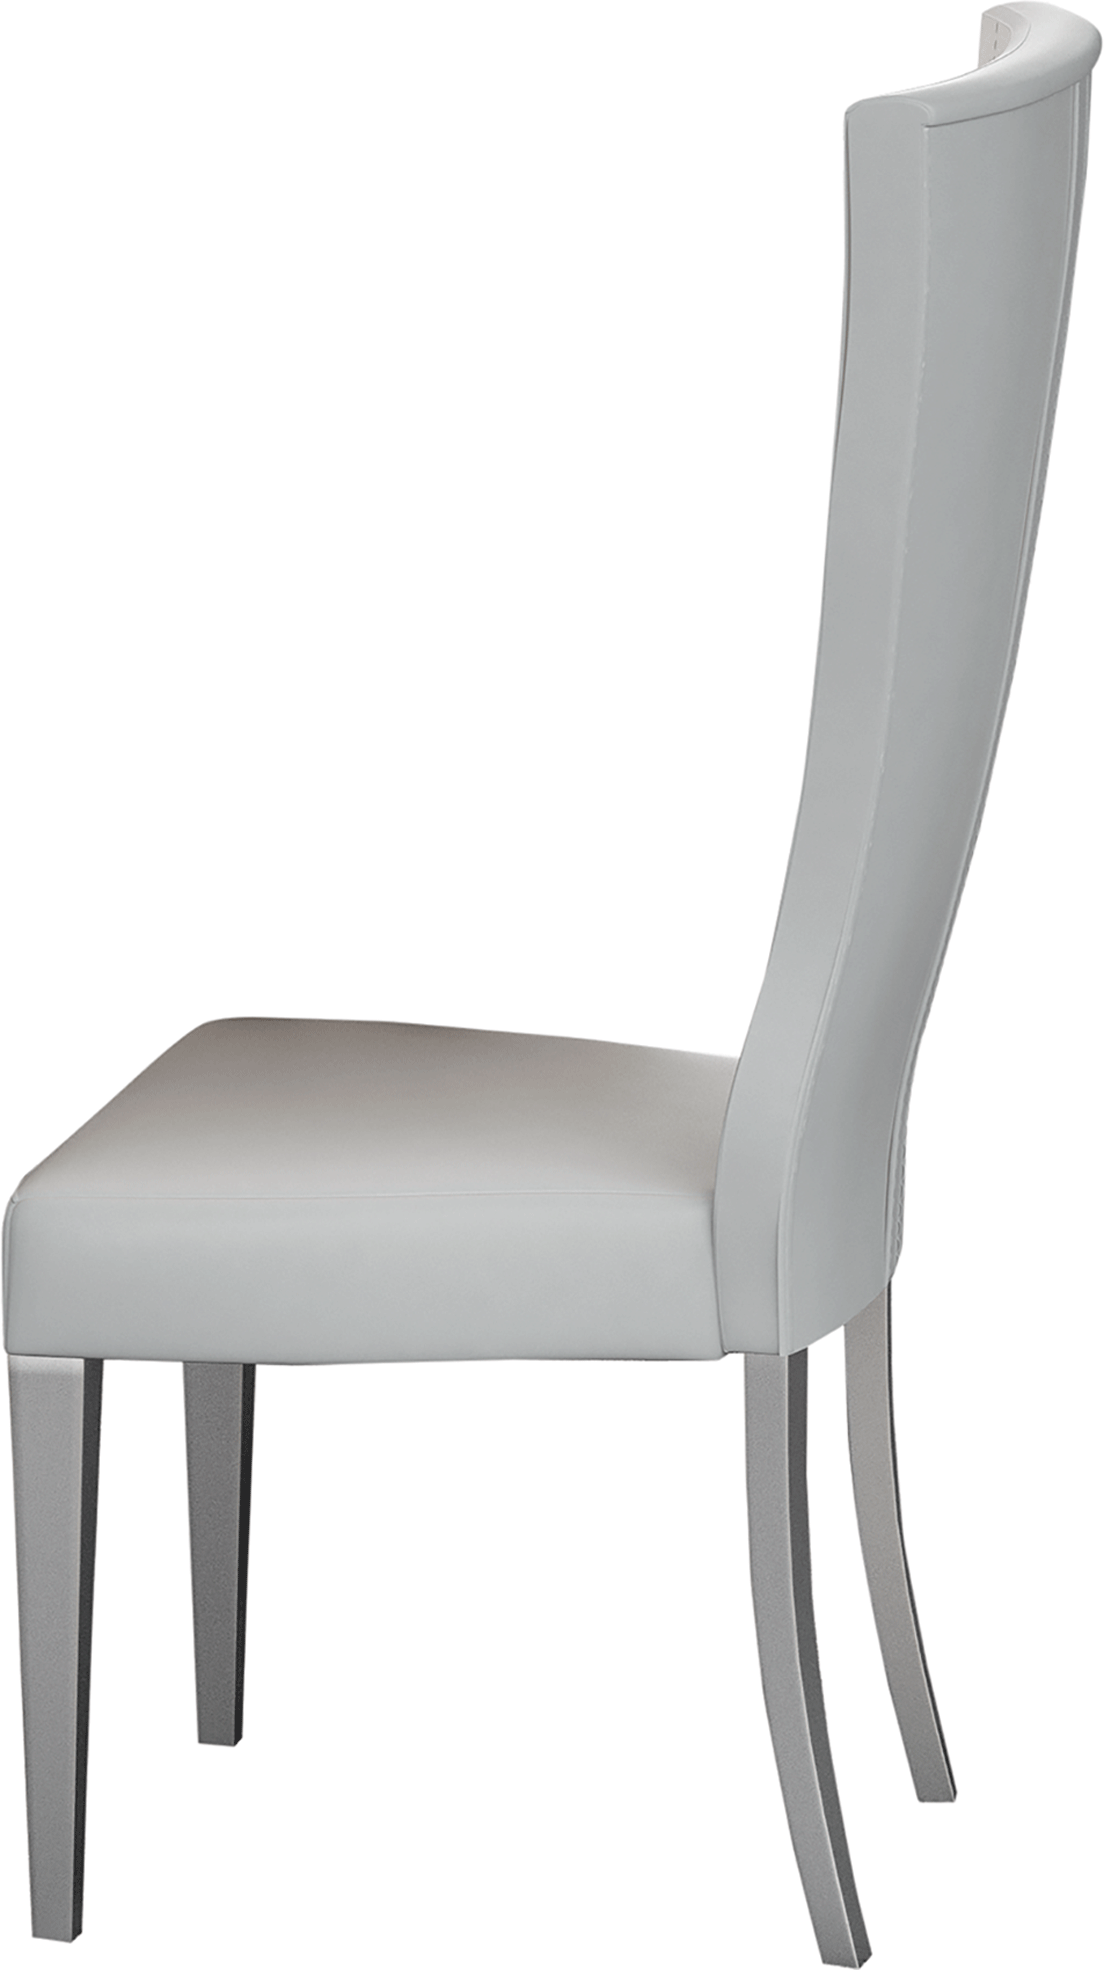 Brands Franco Maximo Kiu Side Chair